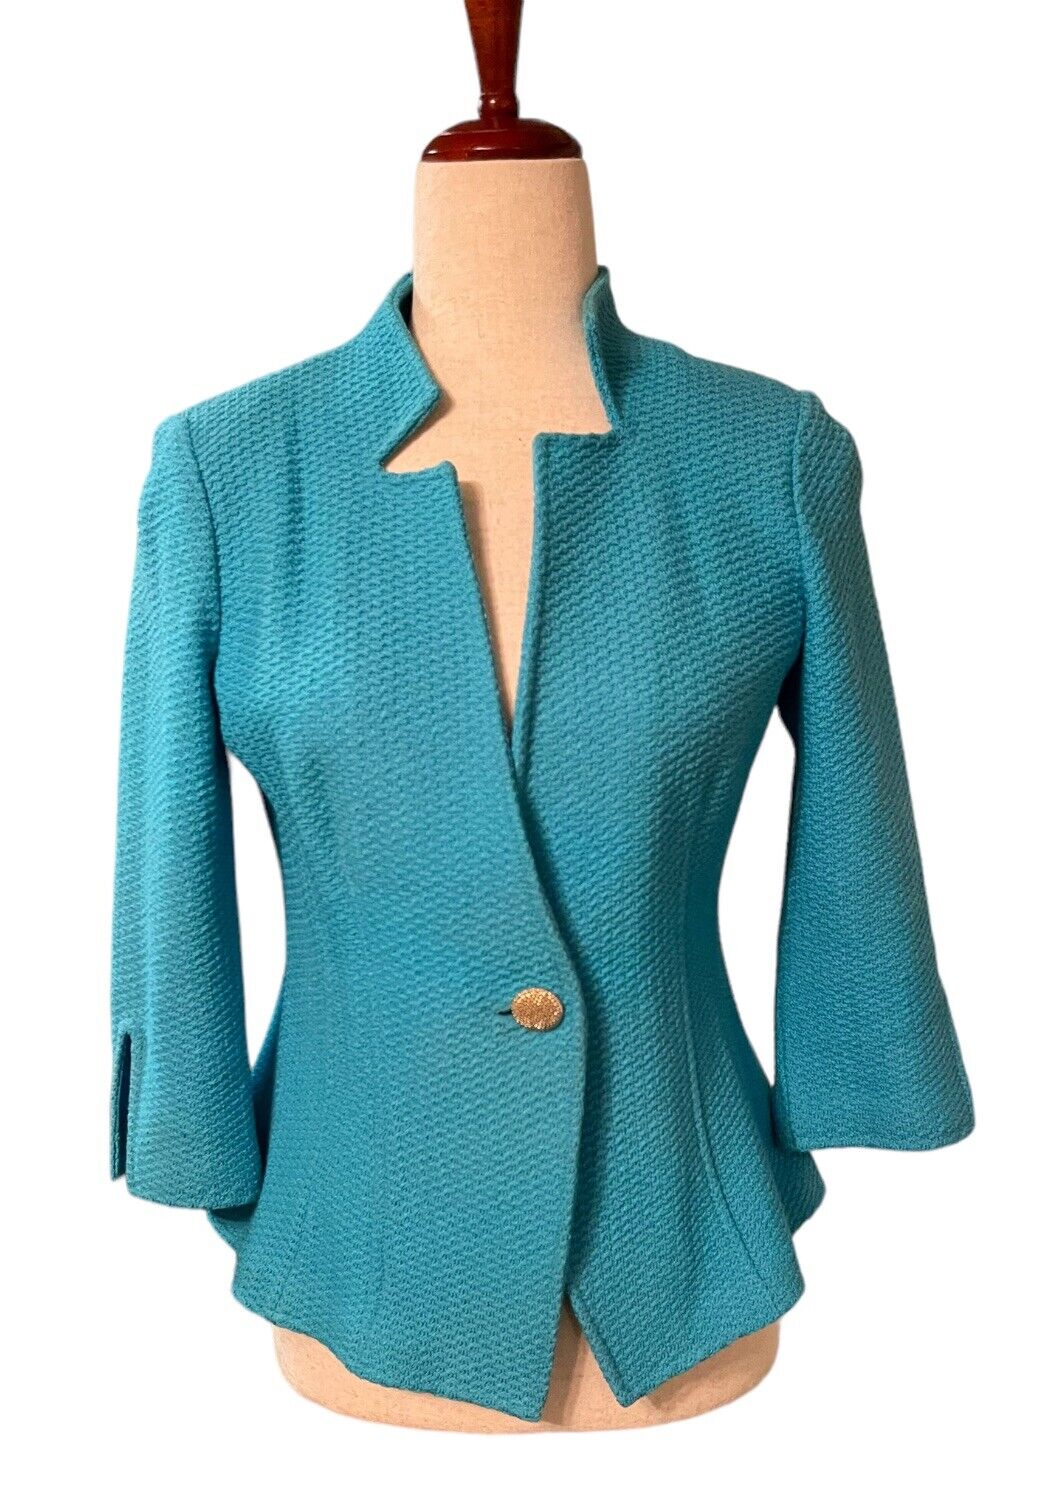 ST. JOHN Turquoise One Button Wool Blend Blazer Jacket Women’s Size 4 USA Made